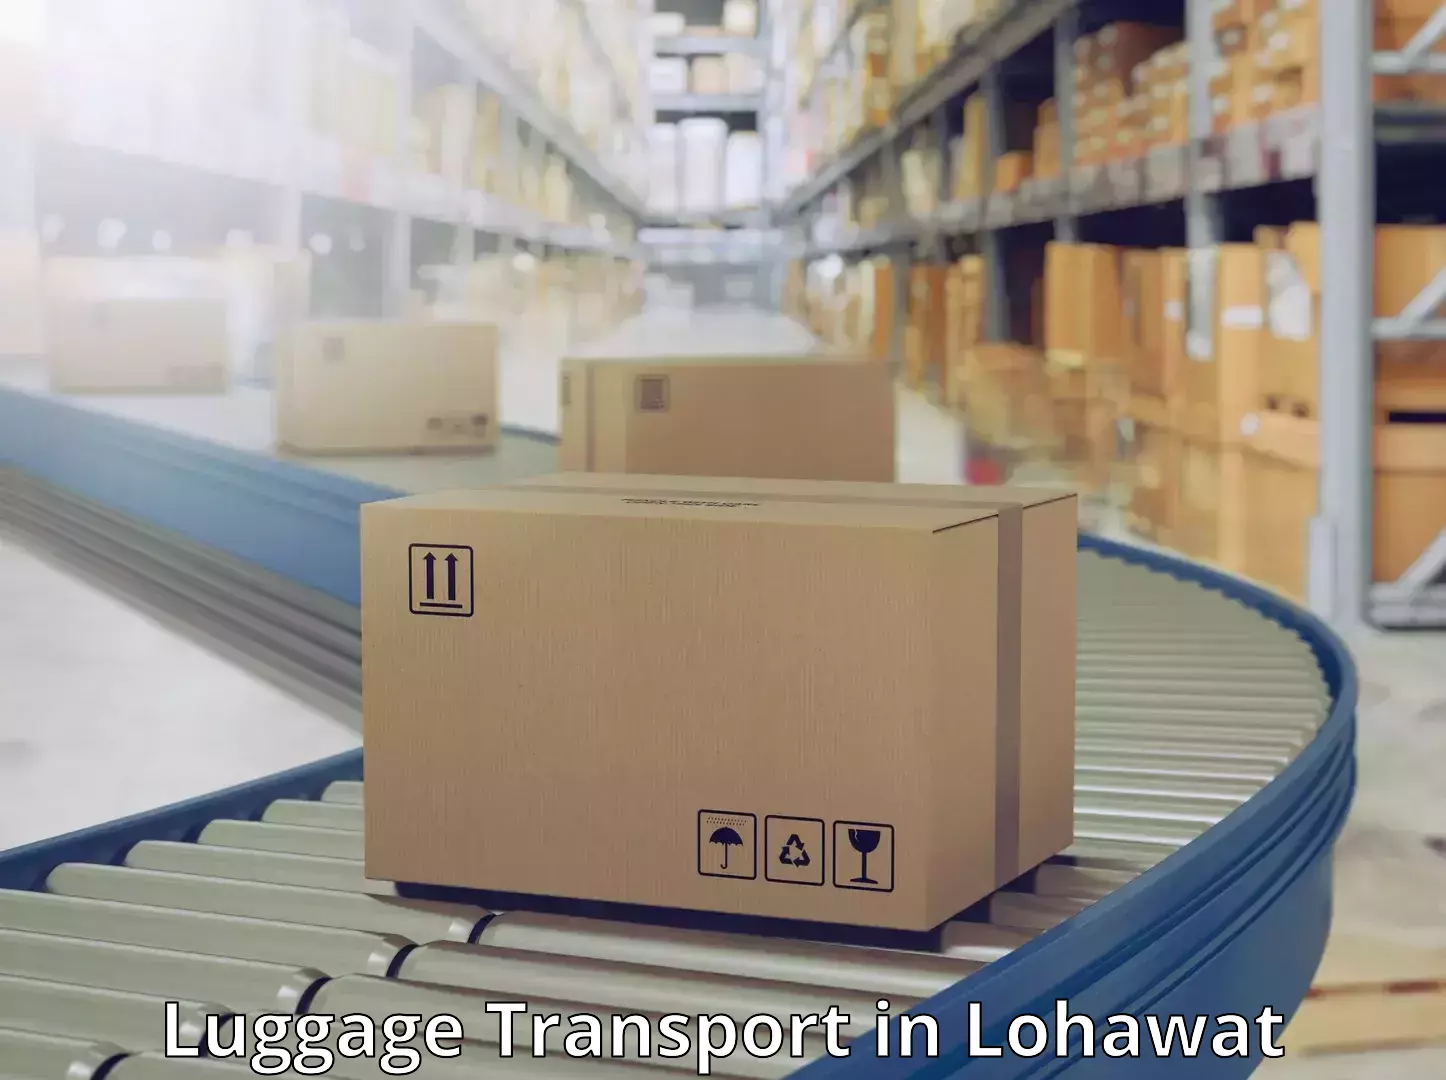 Automated luggage transport in Lohawat